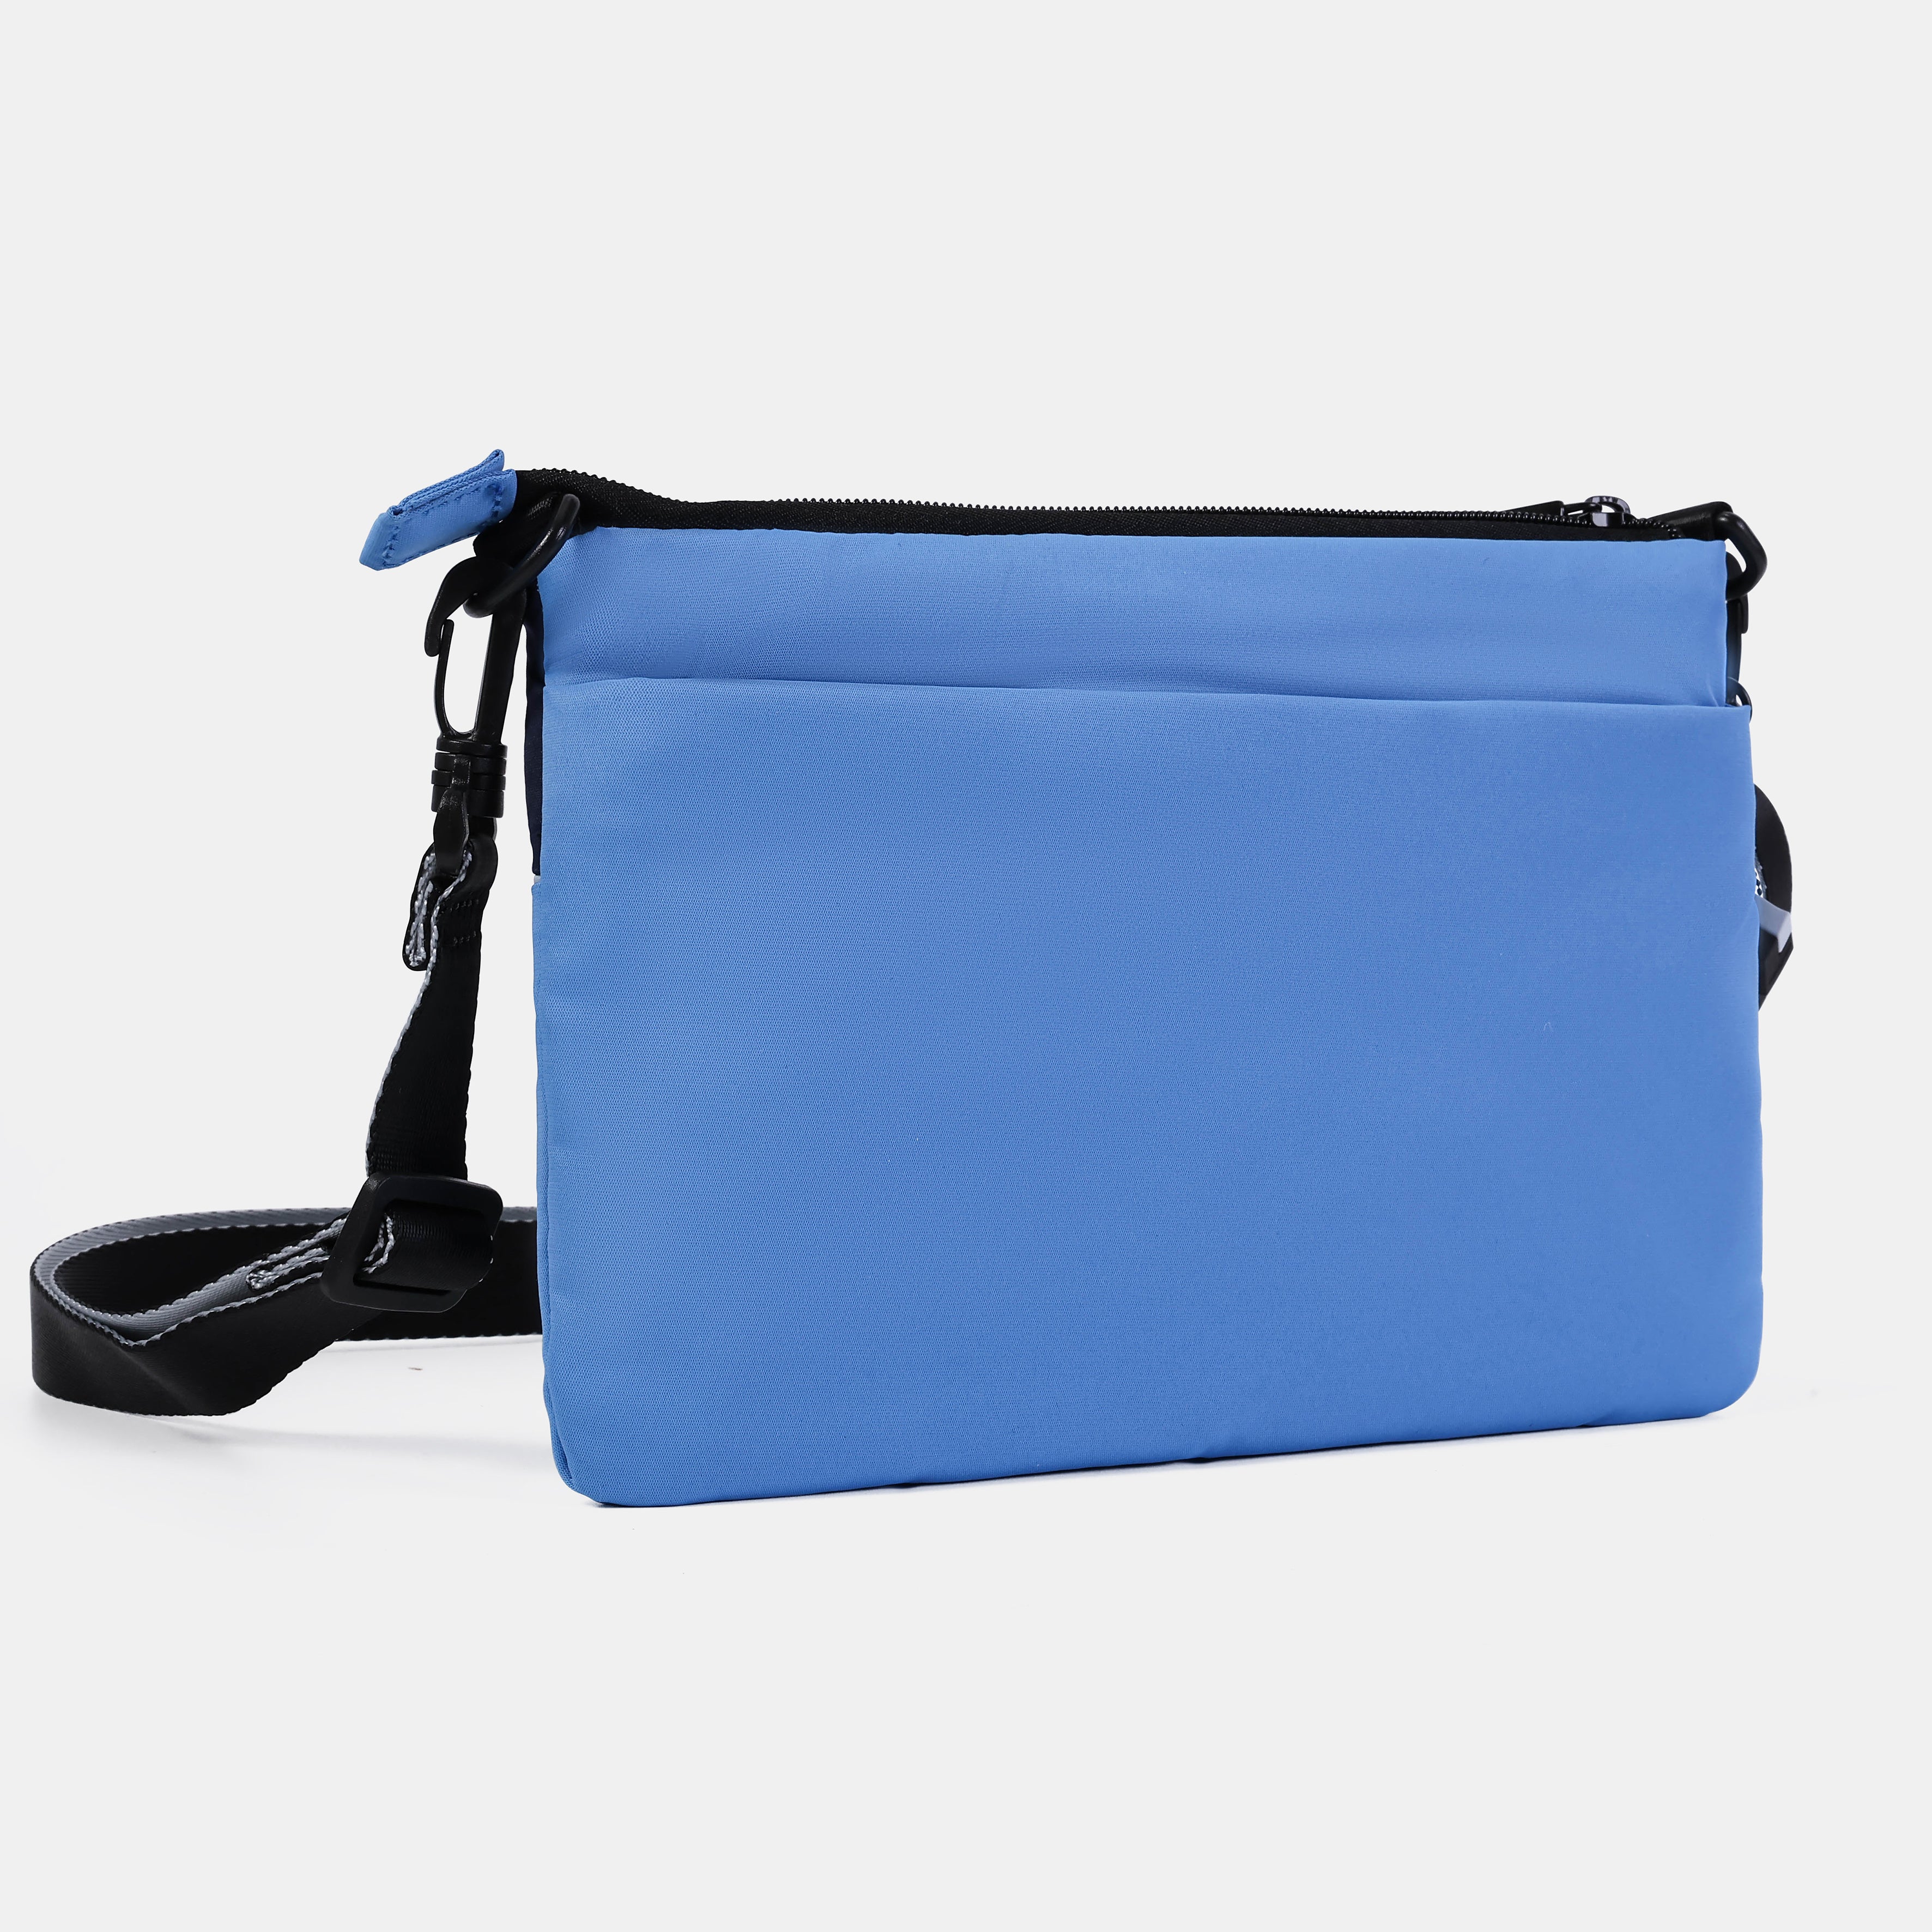 Hedgren Orbit Blueaboard Bag